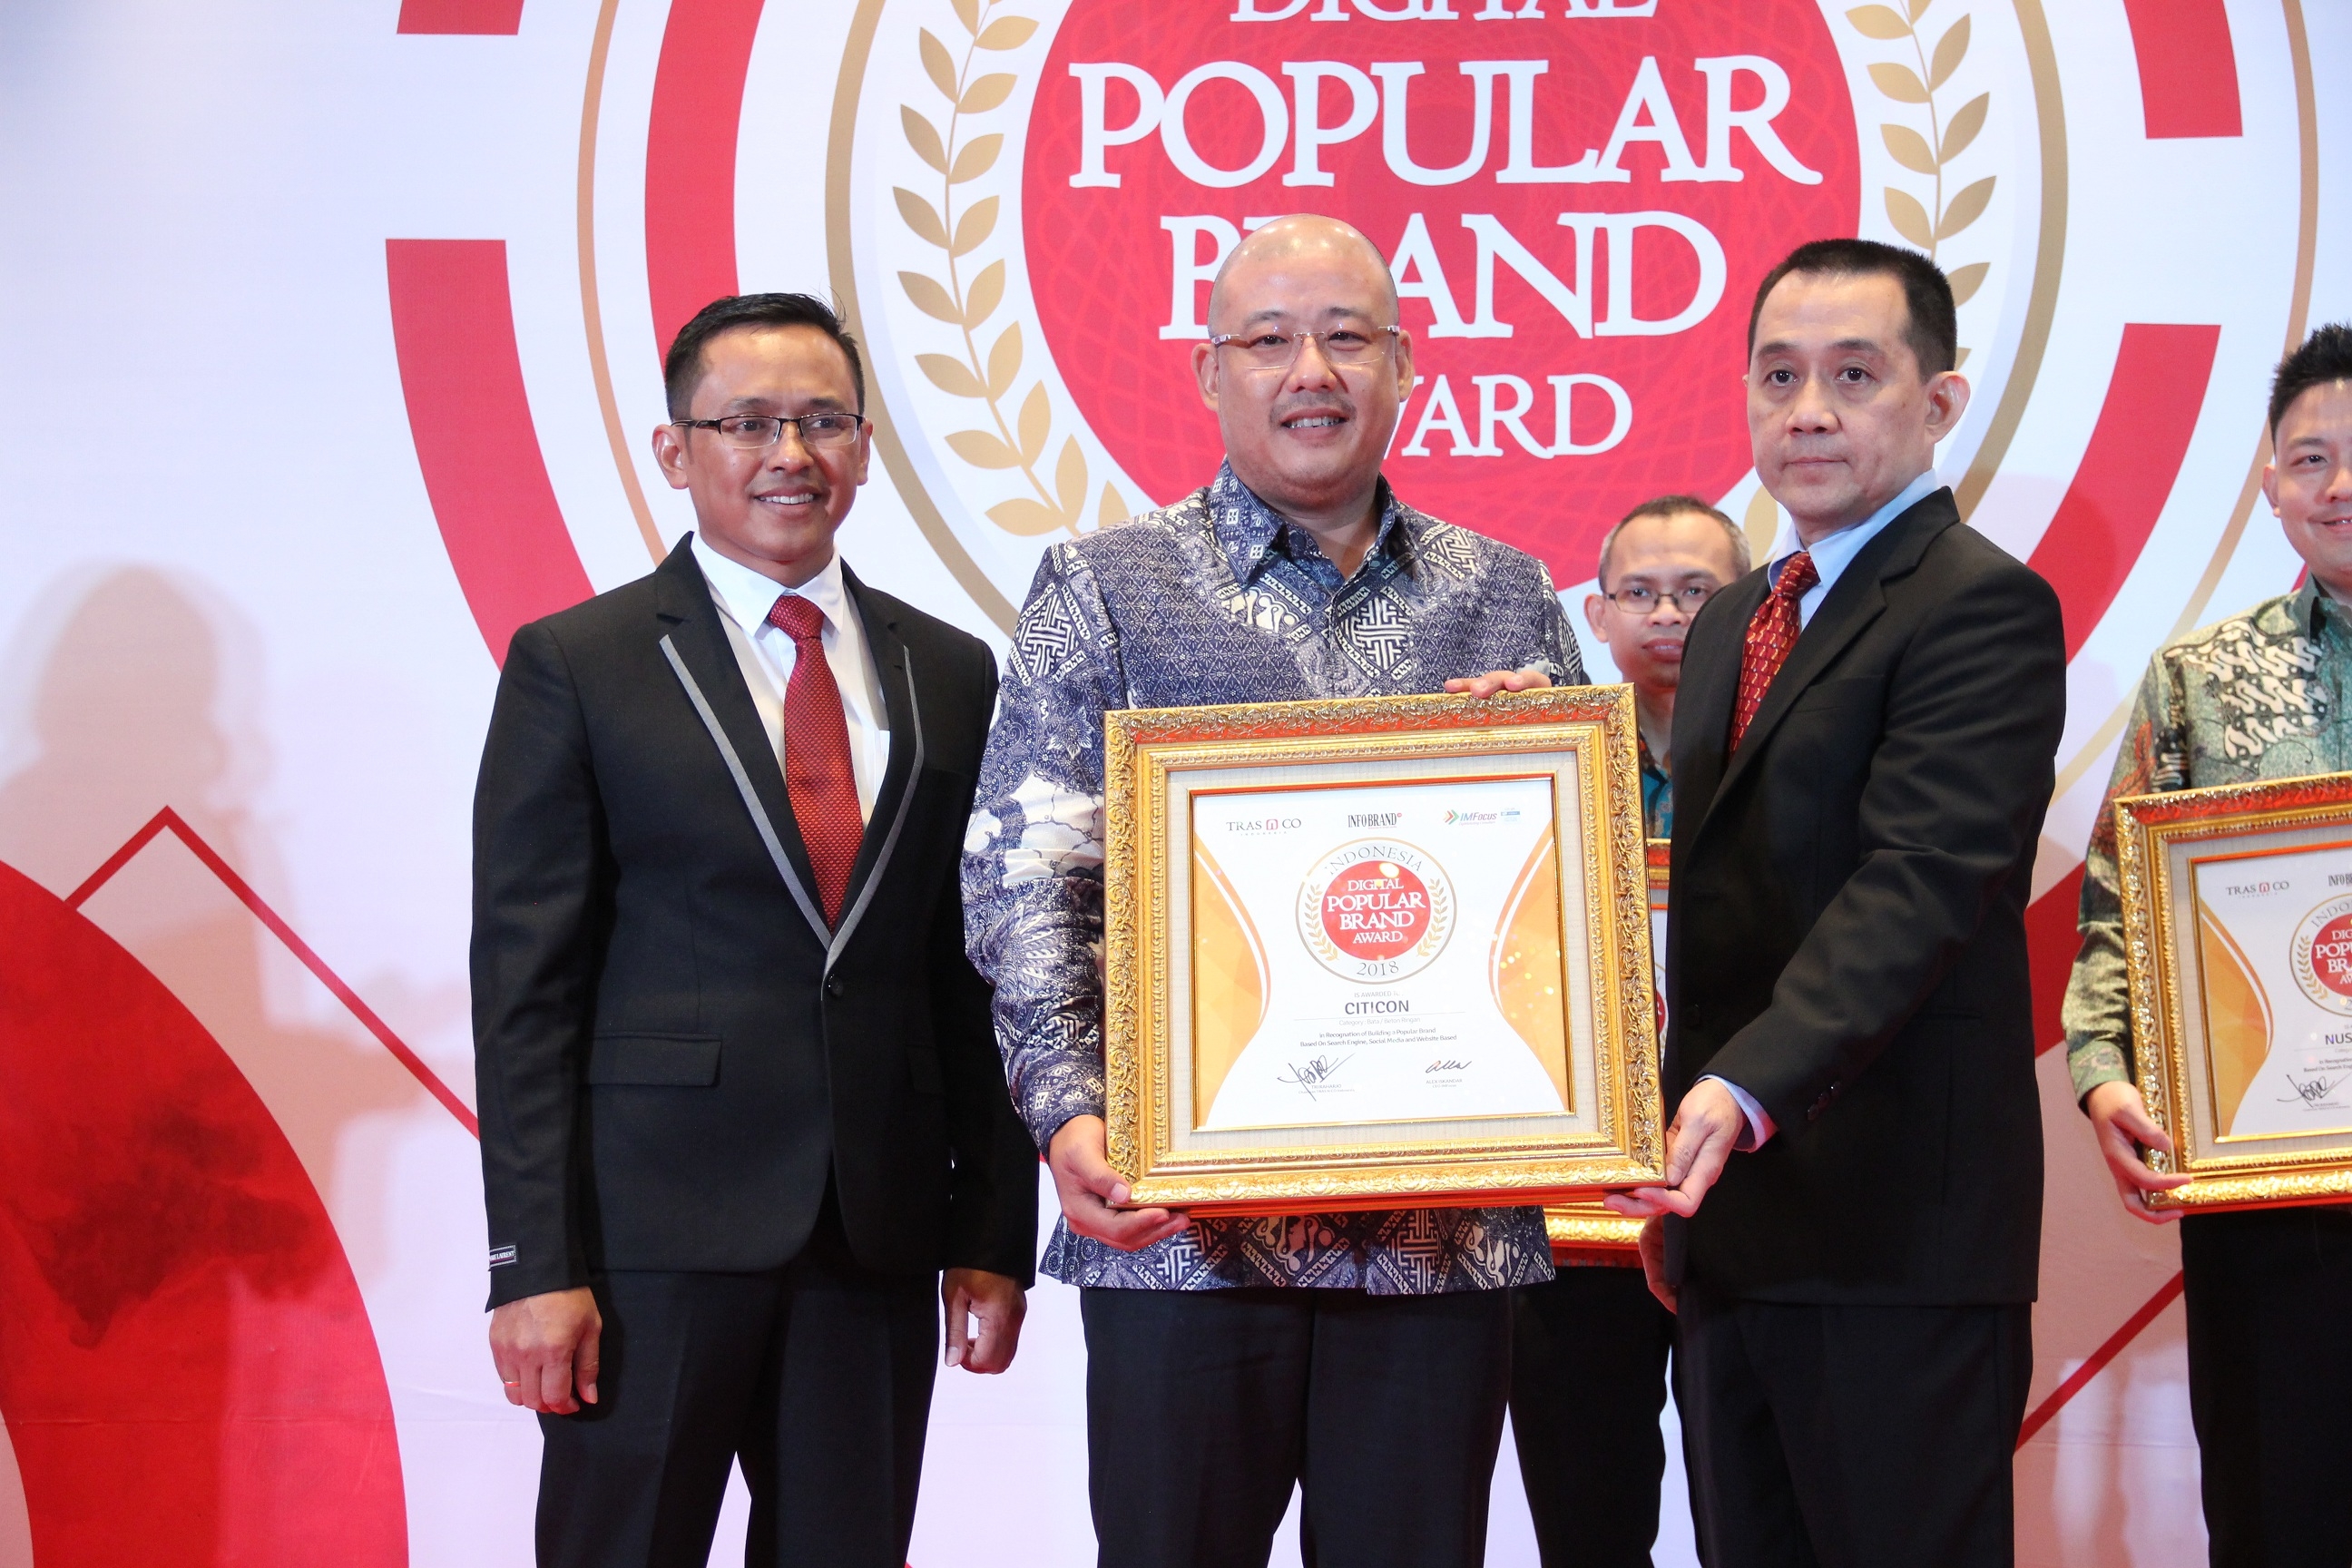 Citicon, Merek Material Bangunan Ramah Lingkungan Sabet Penghargaan Indonesia Digital Popular Brand Award 2018